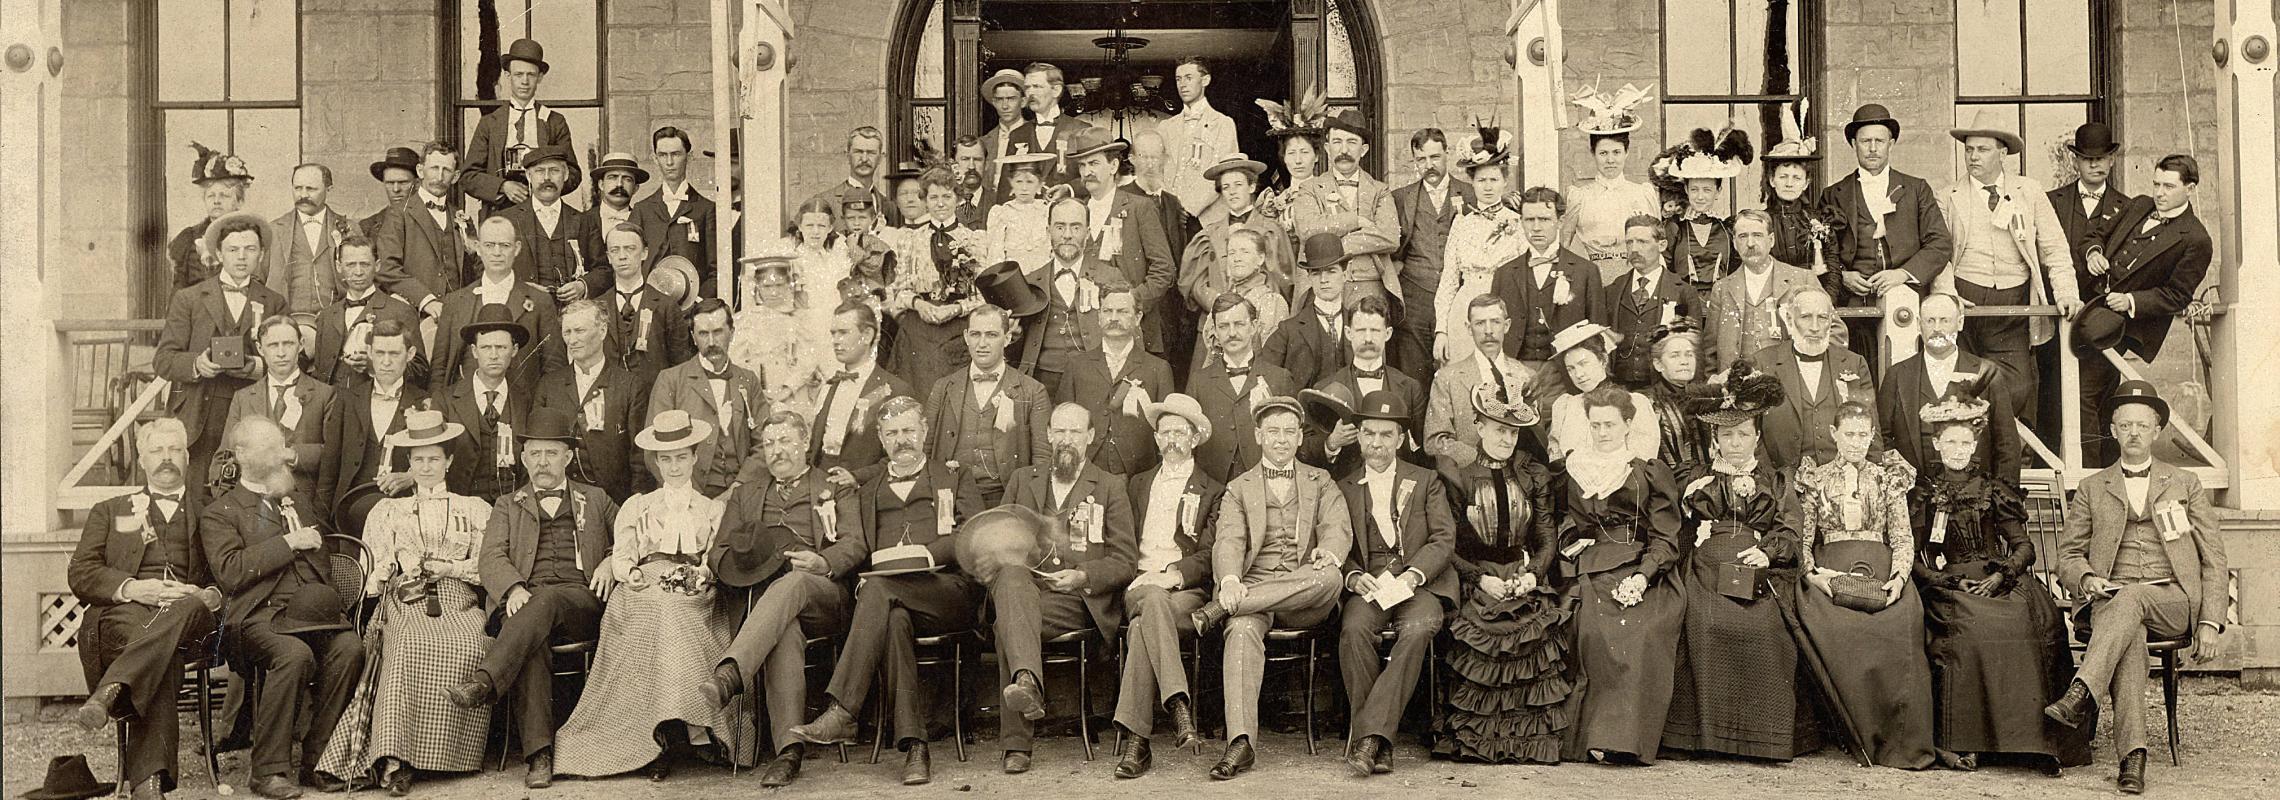 Missouri Press Association group photo, taken during conference at Eureka Springs in May 25-27, 1898, when SHSMO was established